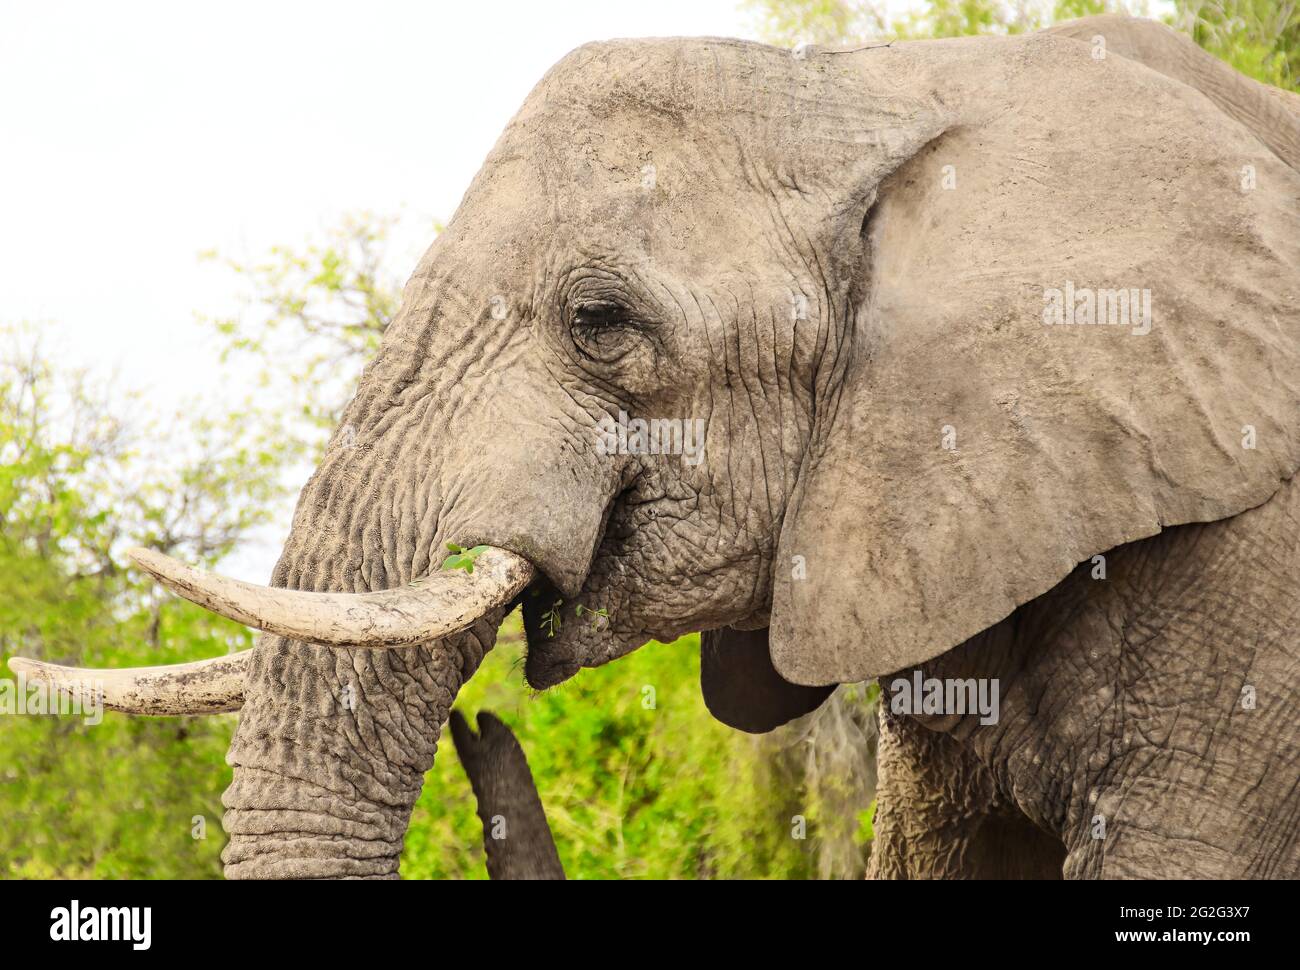 primer plano de un elefante, elefante africano, vida silvestre de áfrica Foto de stock